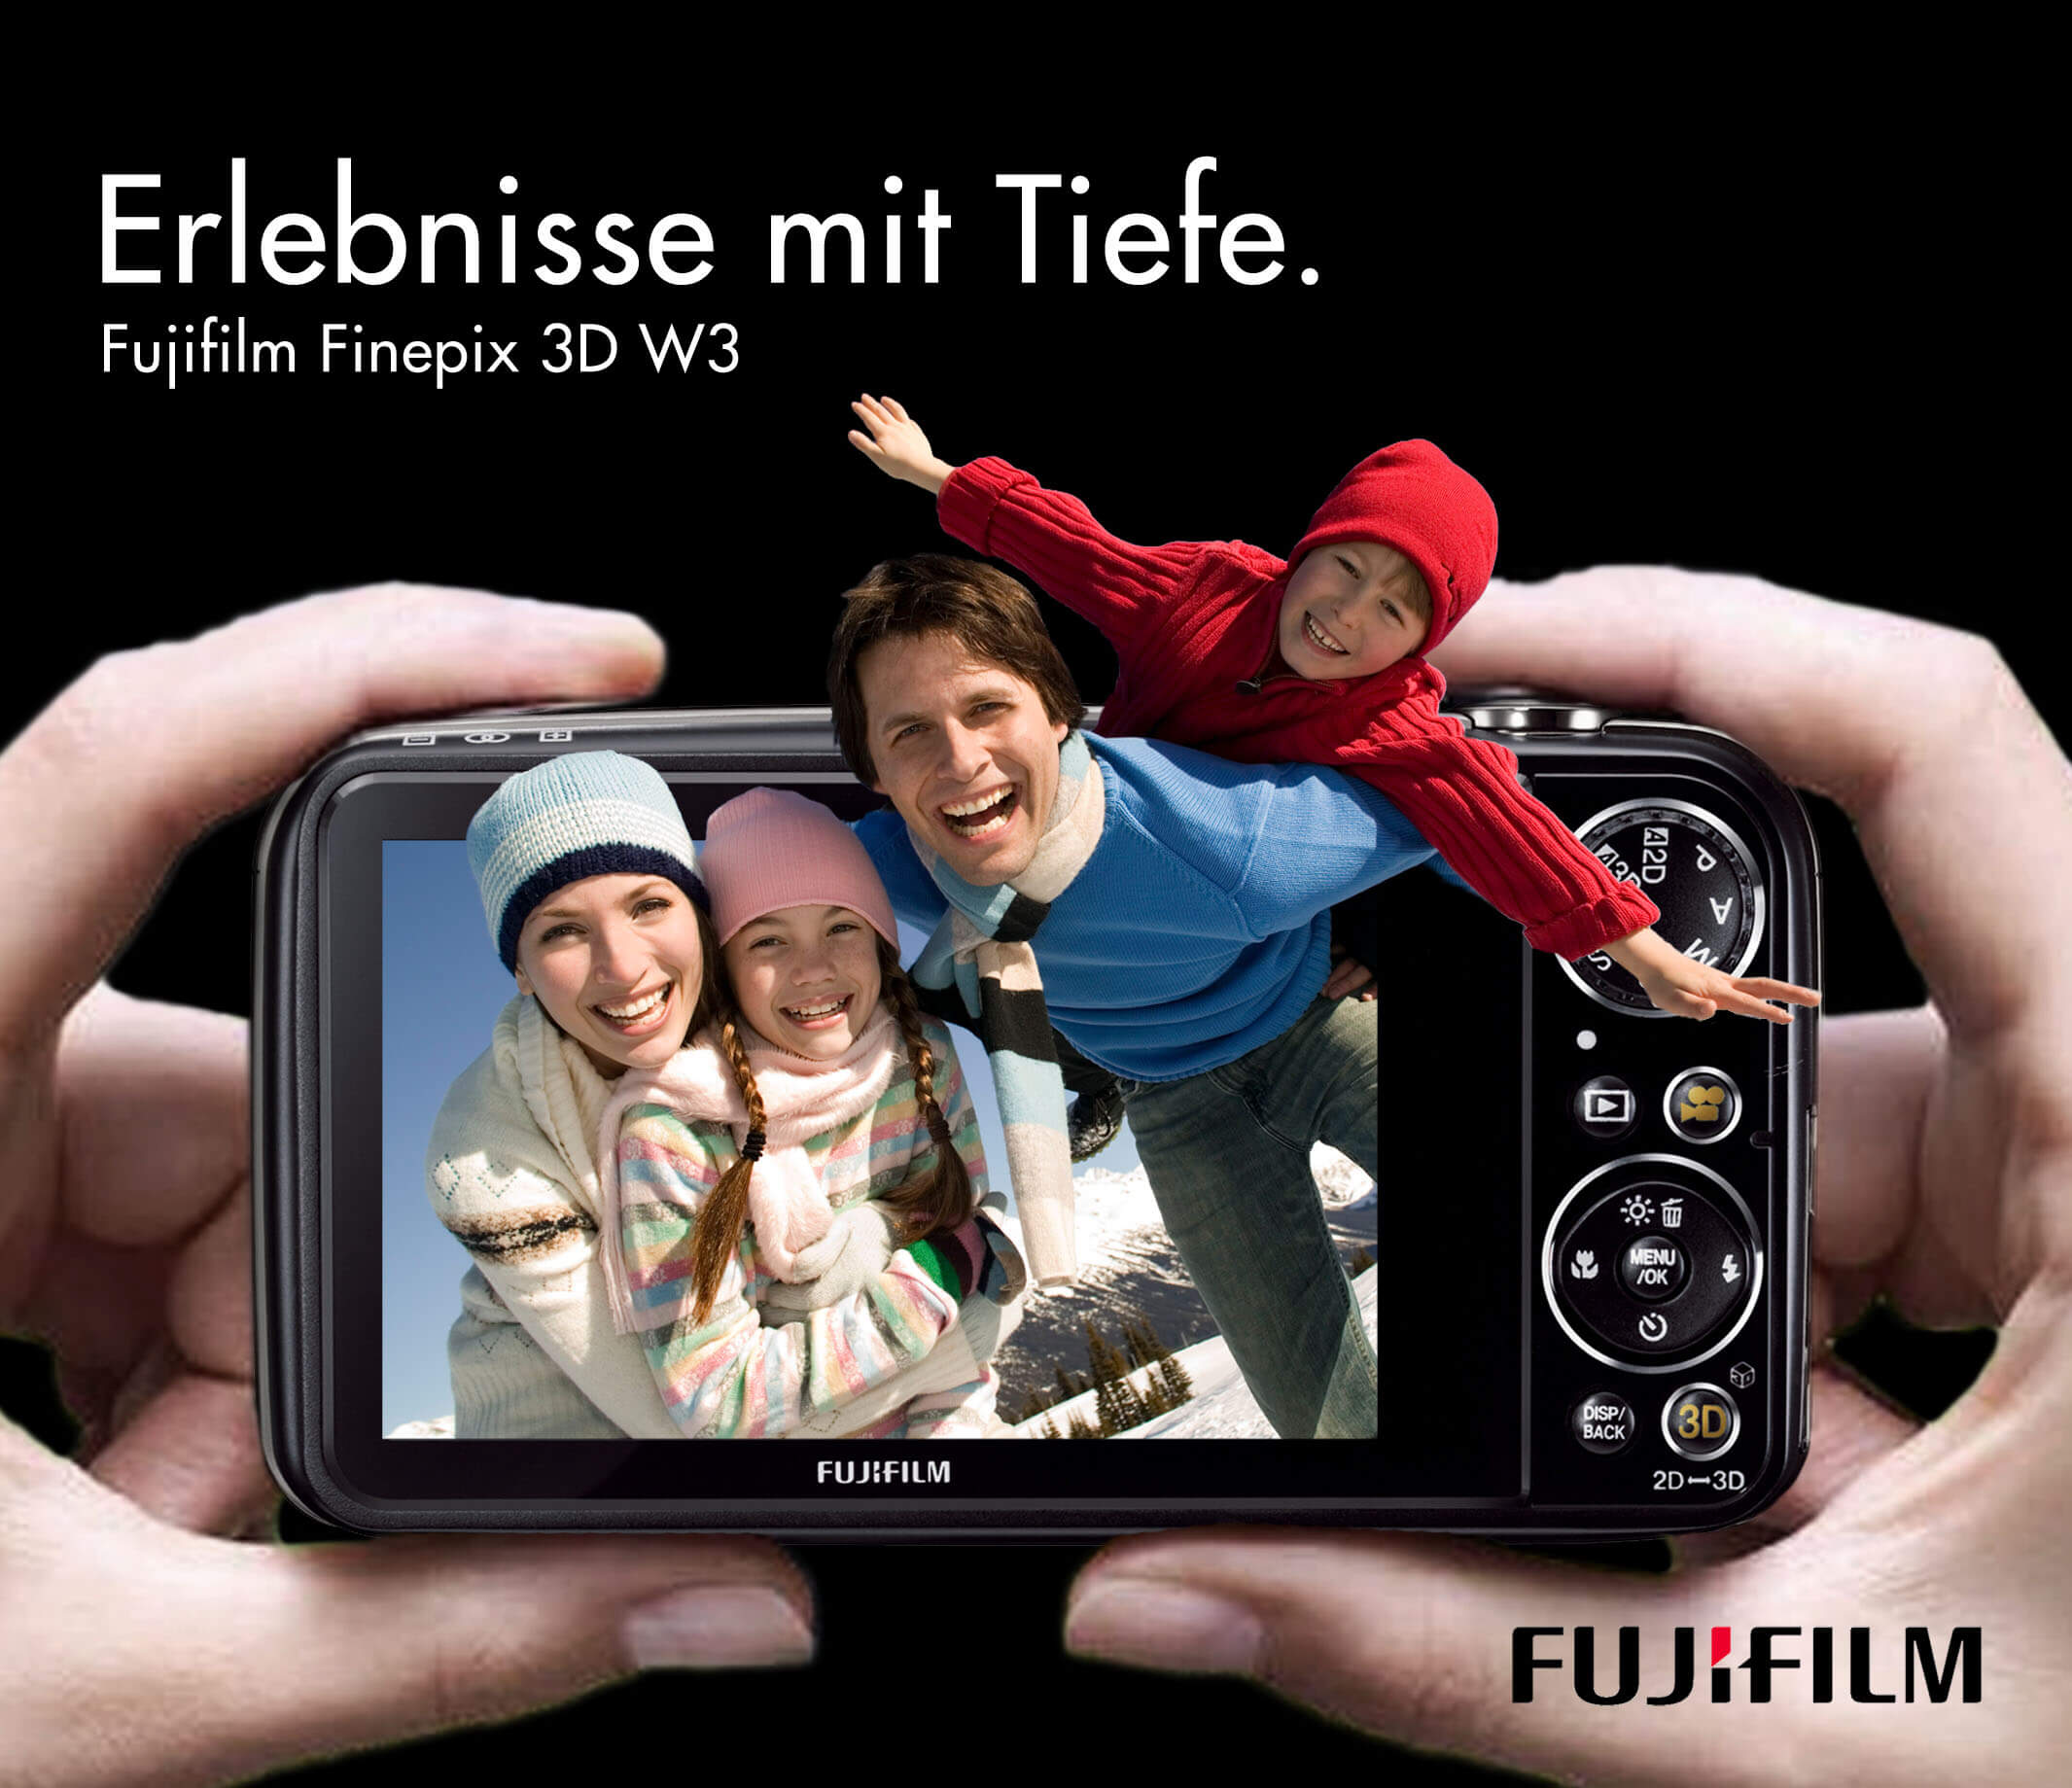 Fujitsu 3D Kamera Print Anzeige